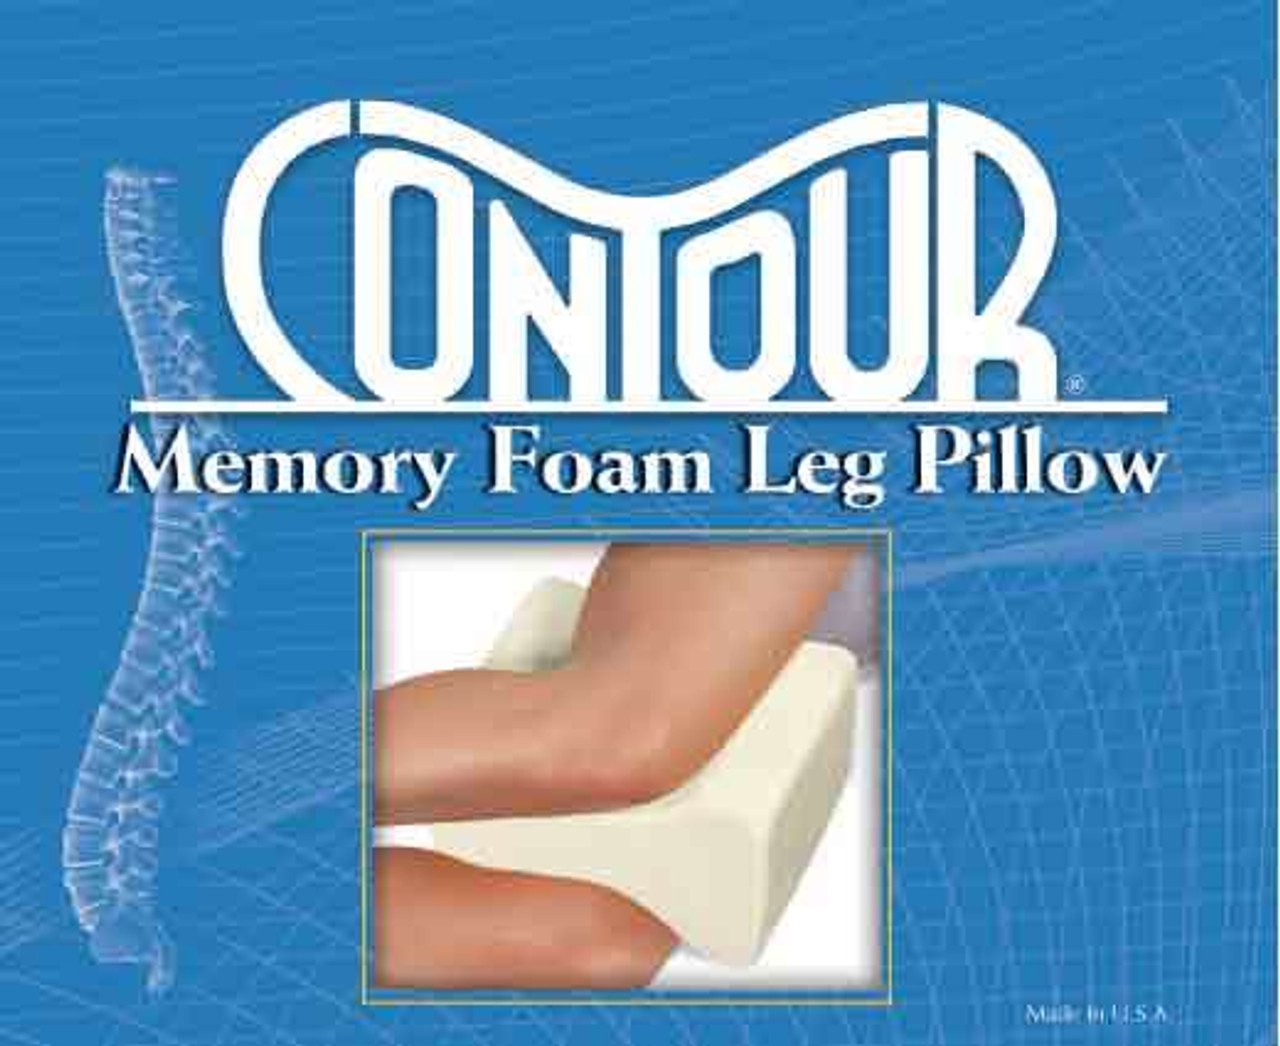 Contoured Memory Foam Leg Pillow